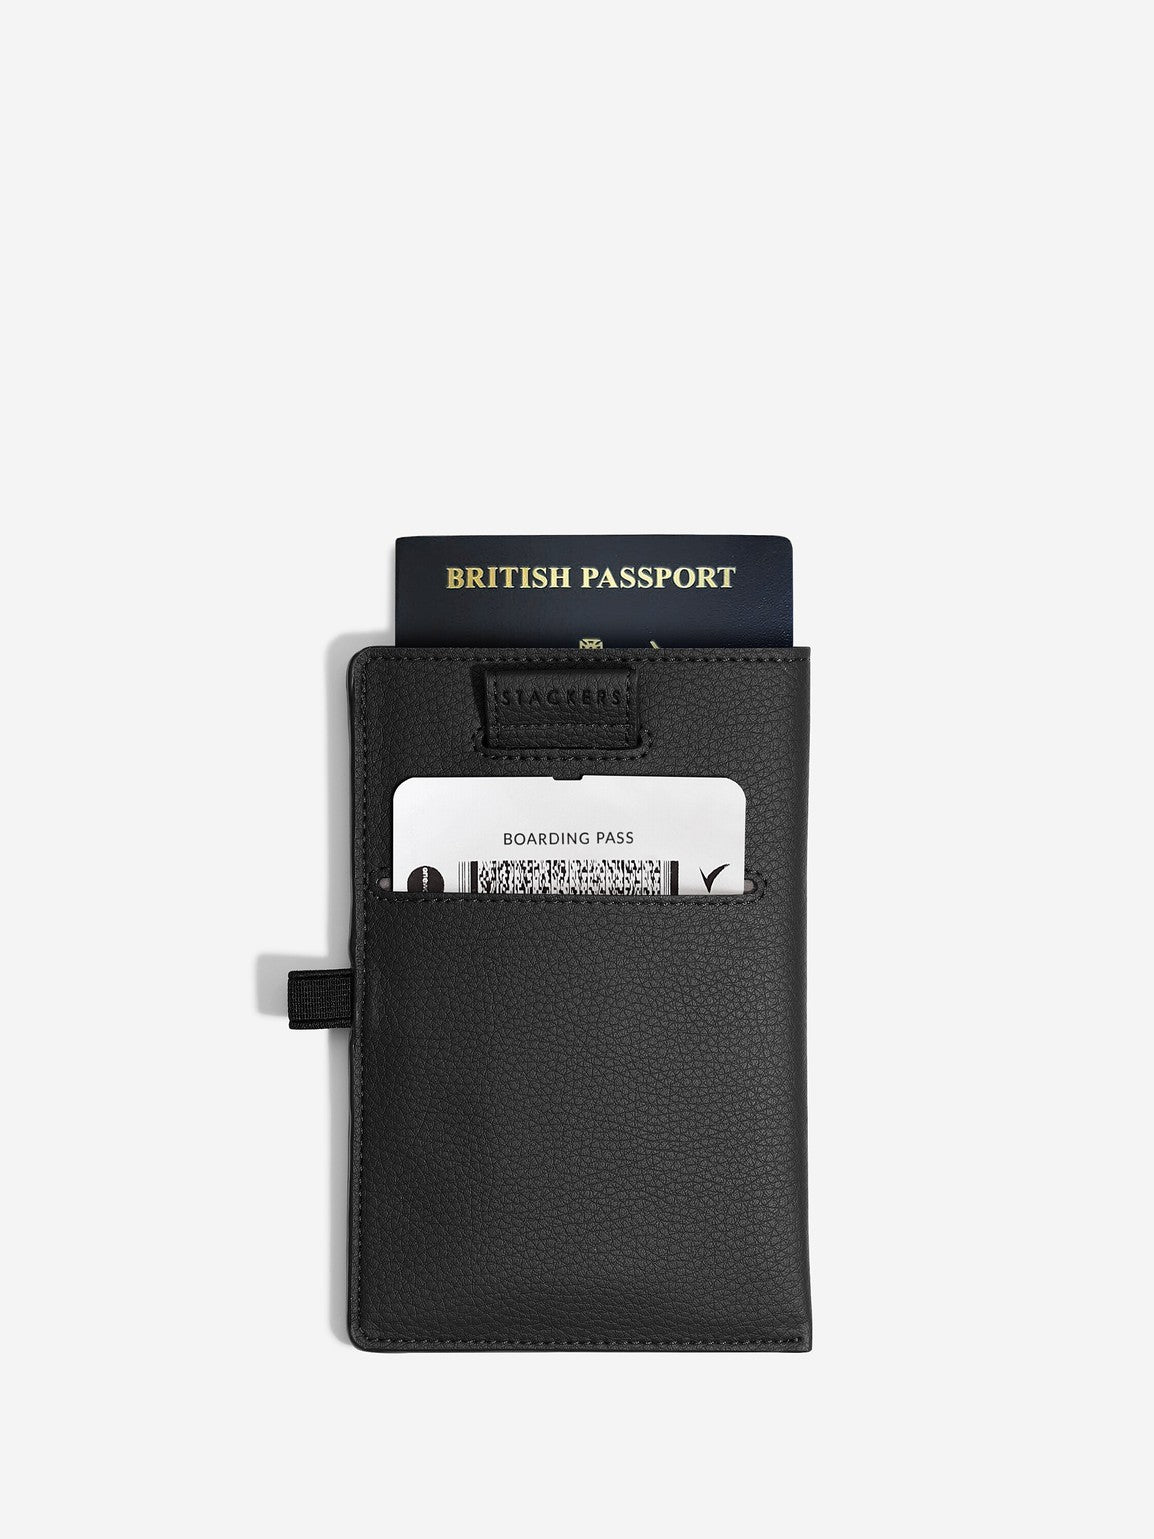 Stackers passport sleeve - Black.